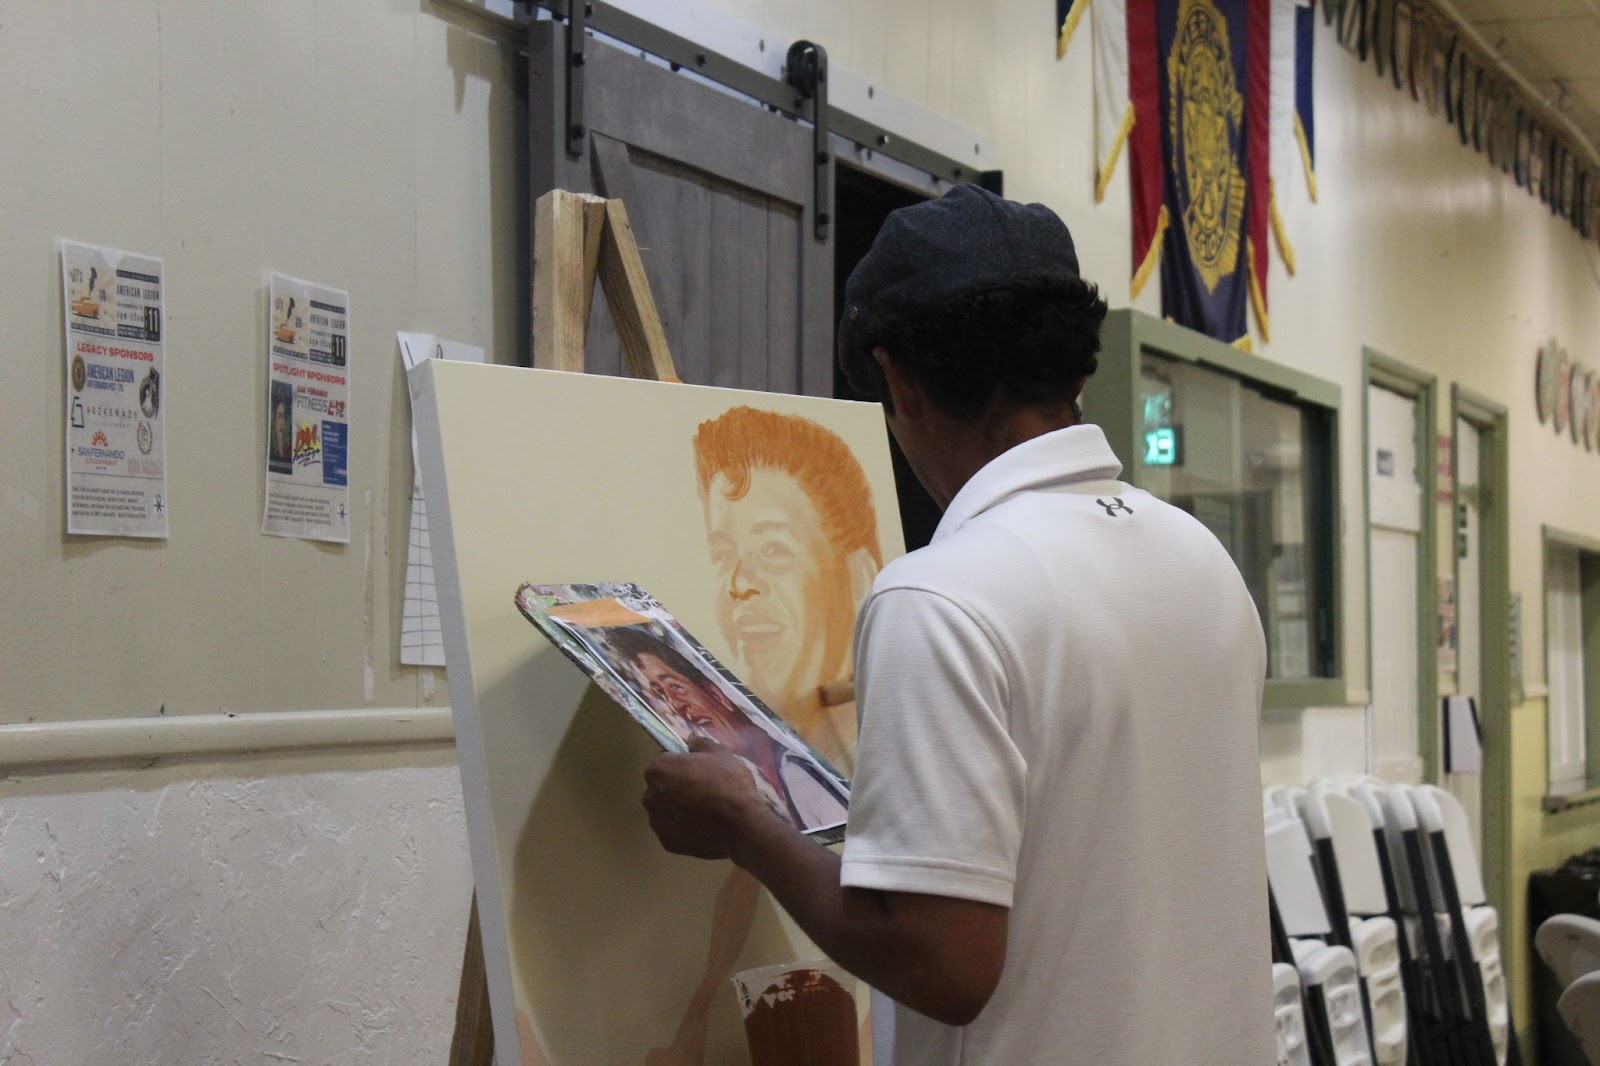 Muralist Levi Ponce painting a portrait of Ritchie Valens at the KROJ benefit concert